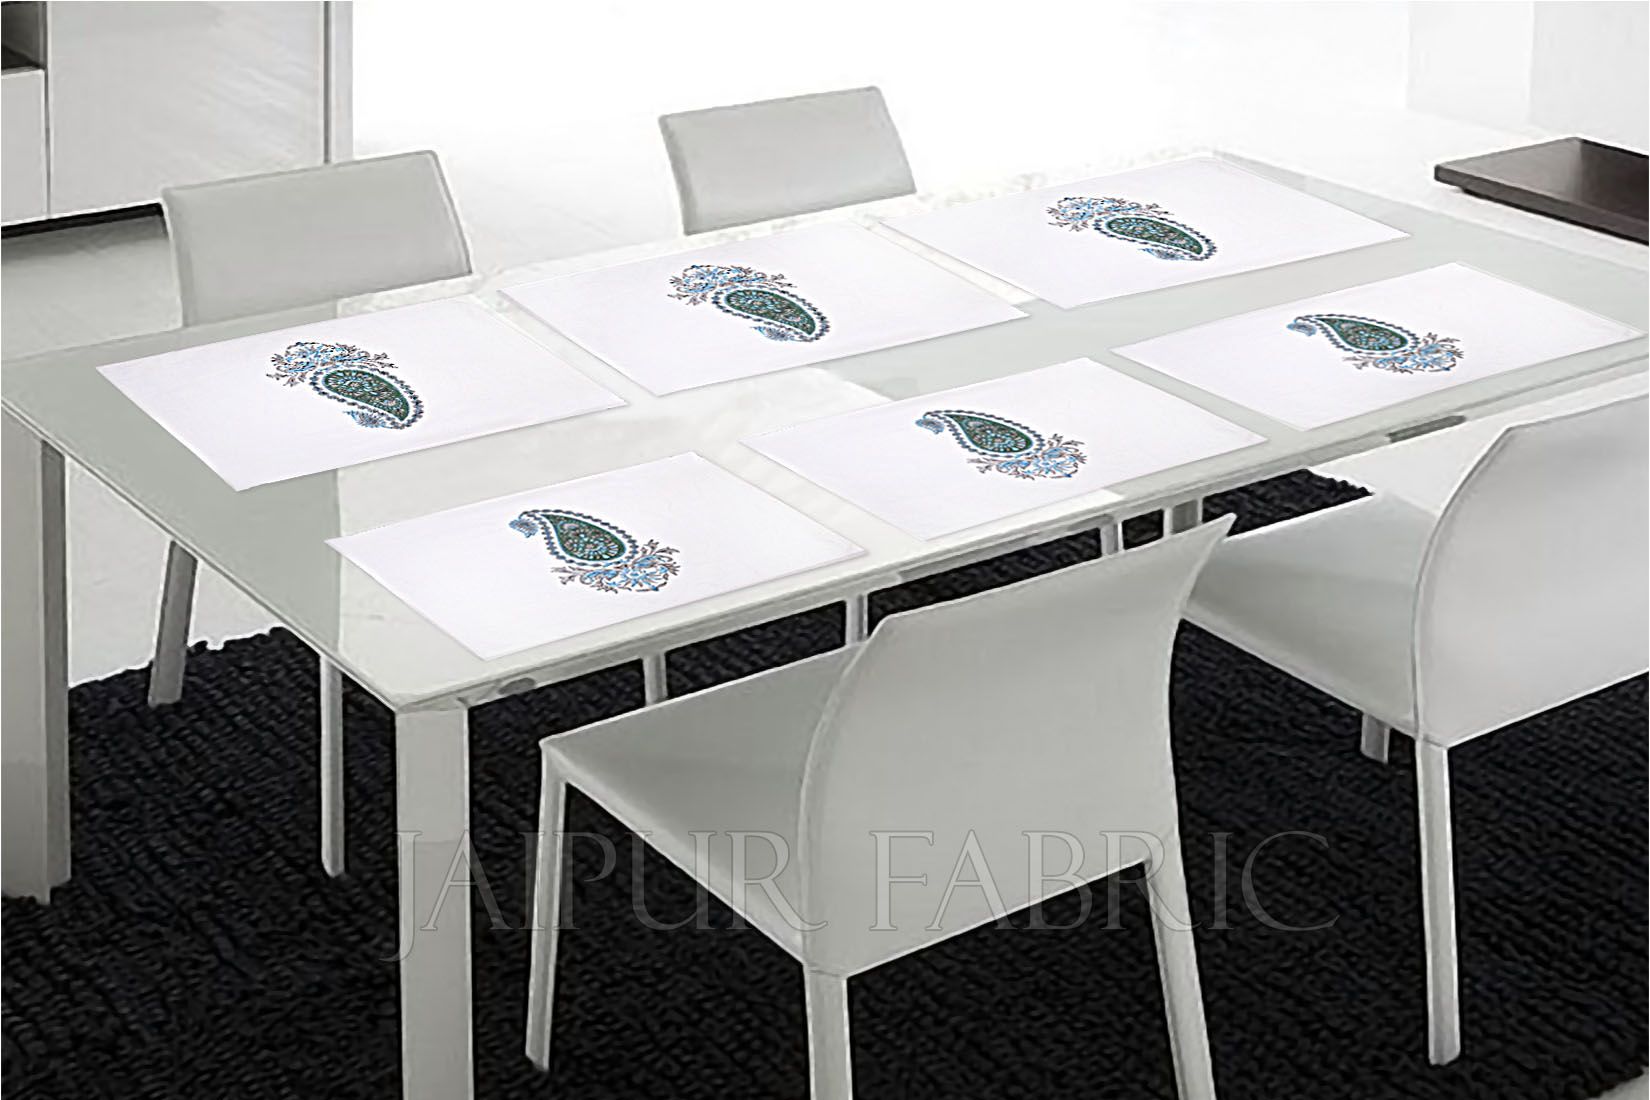 Keri Design Block Print Table Mat